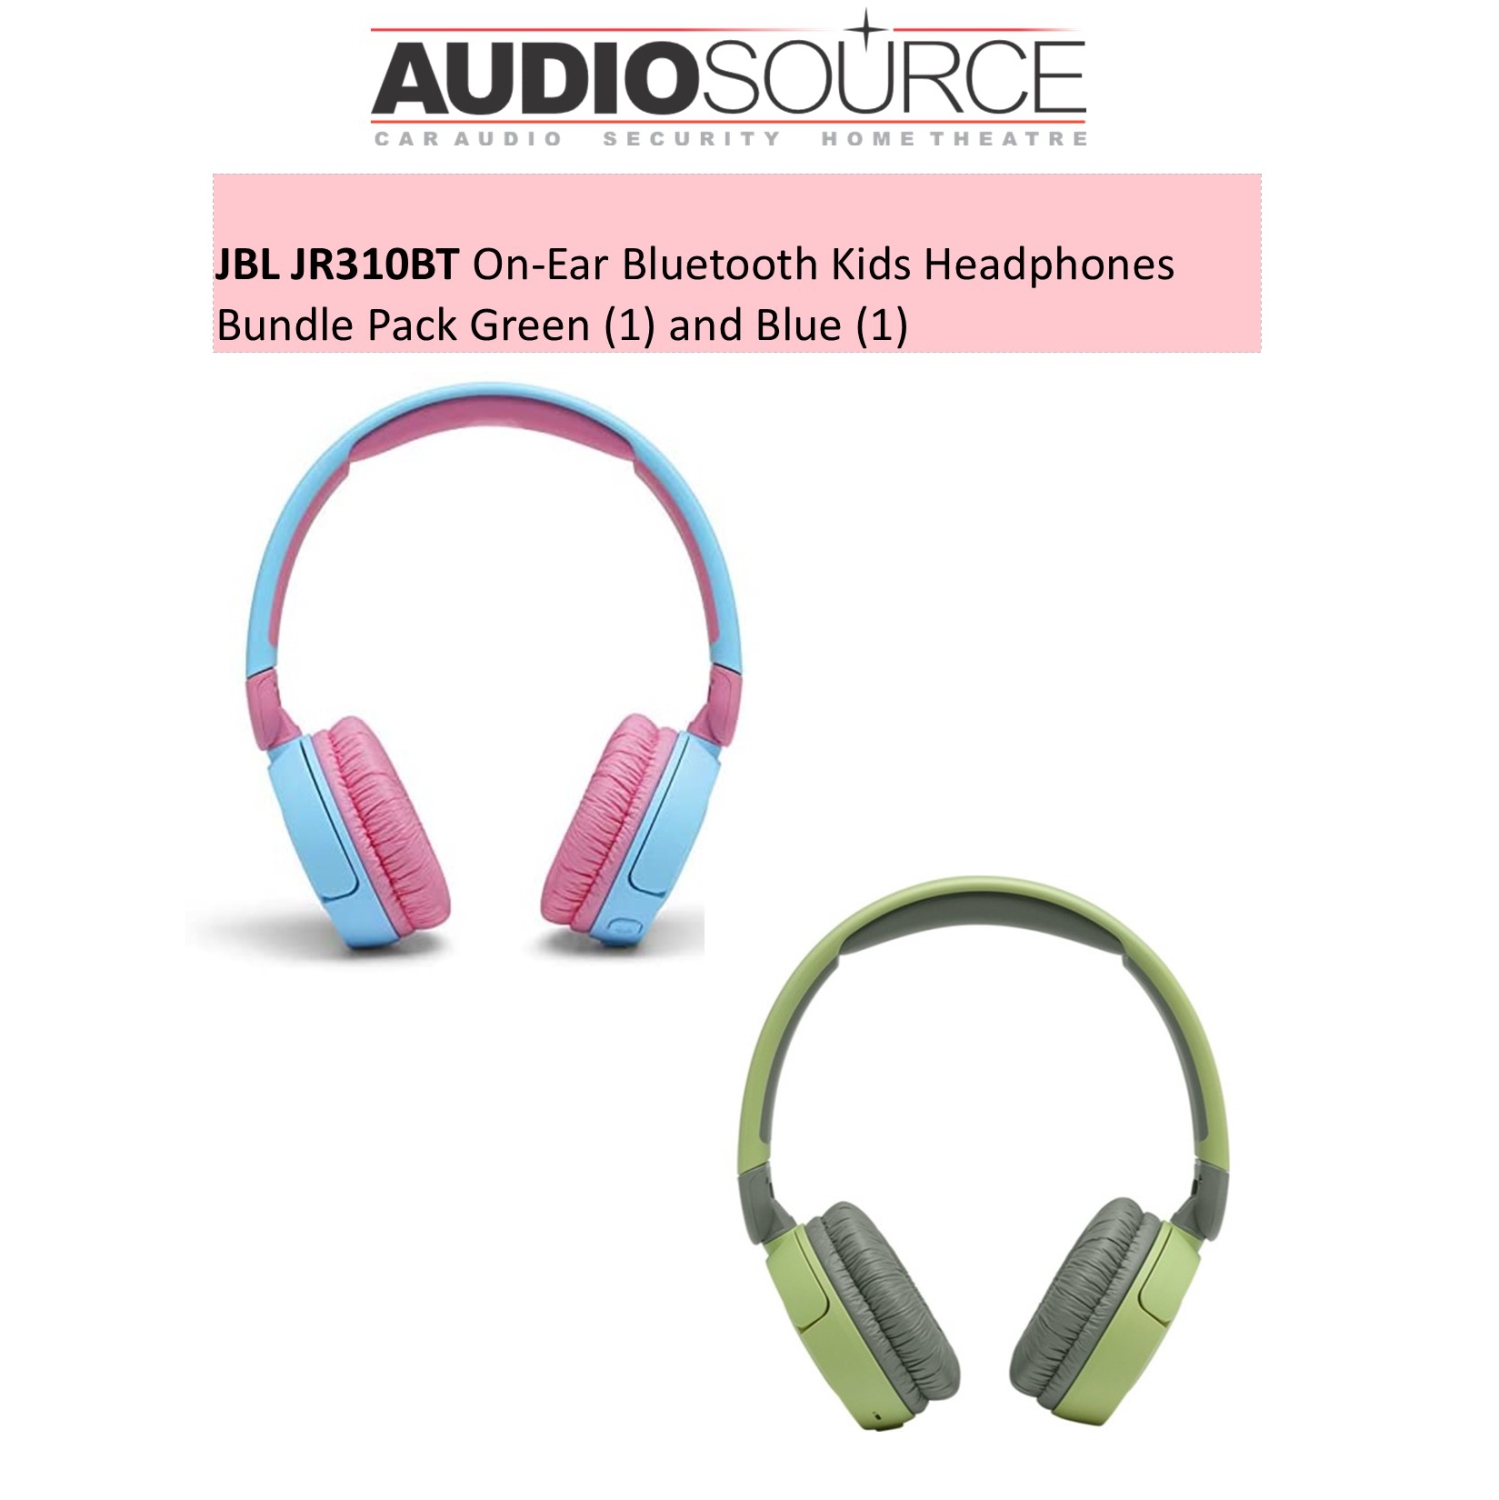 JBL JR310BT On-Ear Bluetooth Kids Headphones Bundle Pack Green (1) and Blue (1)